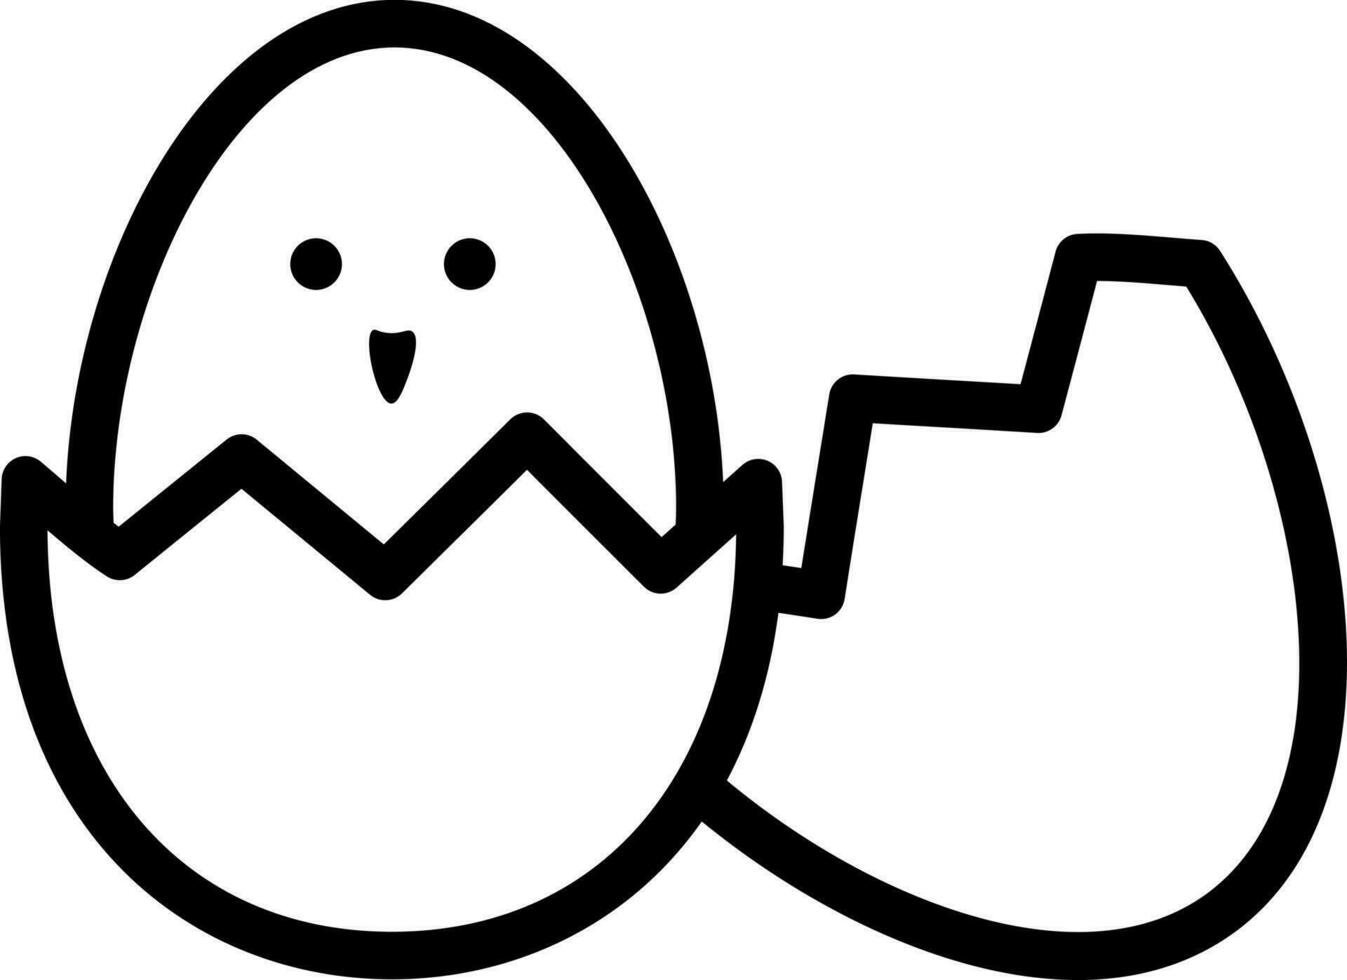 Chick broken egg icon in black line art. vector